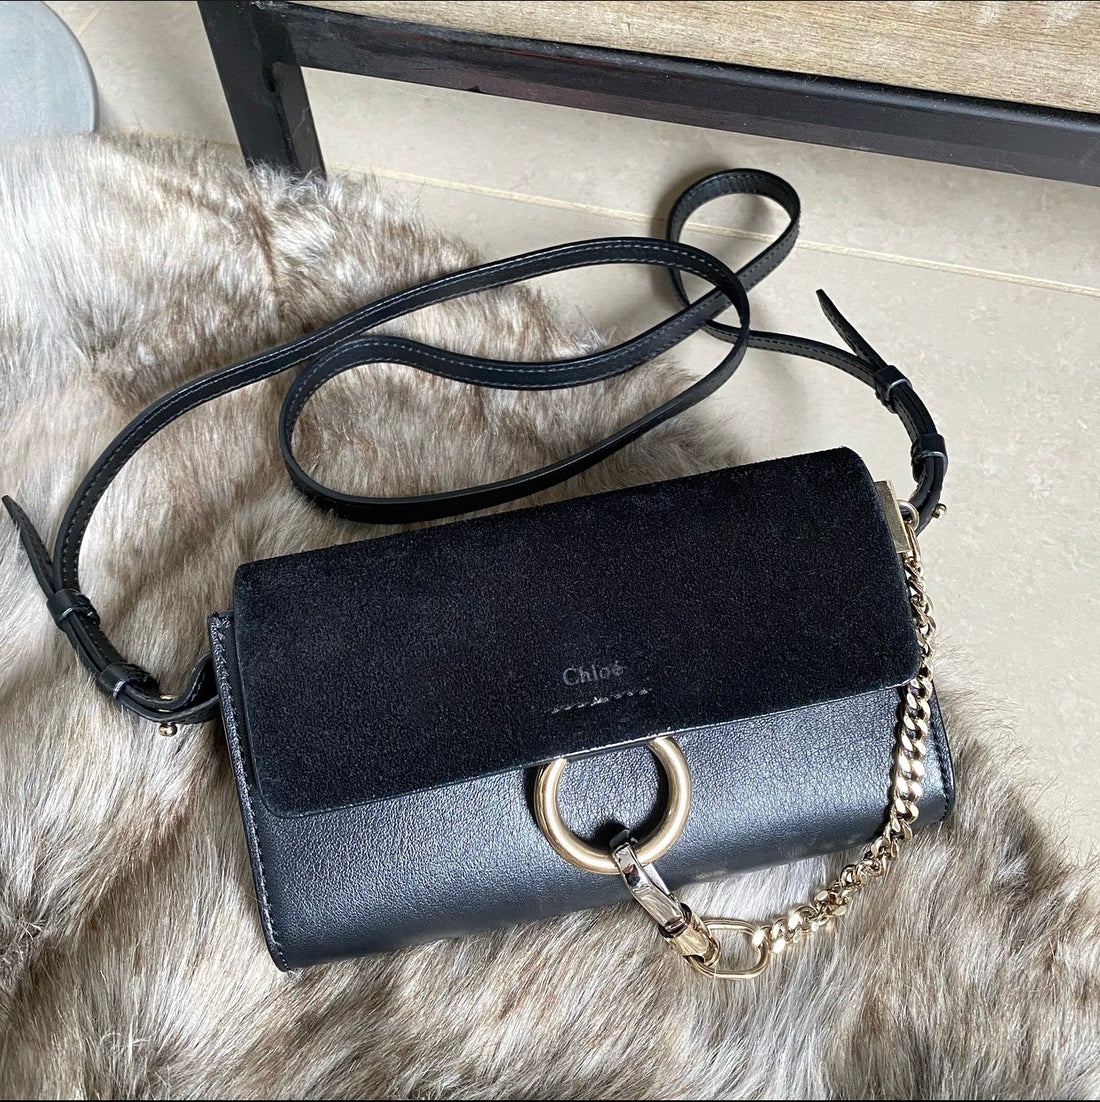 Chloe Black Mini Faye Wallet on Strap Crossbody Bag – I MISS YOU VINTAGE